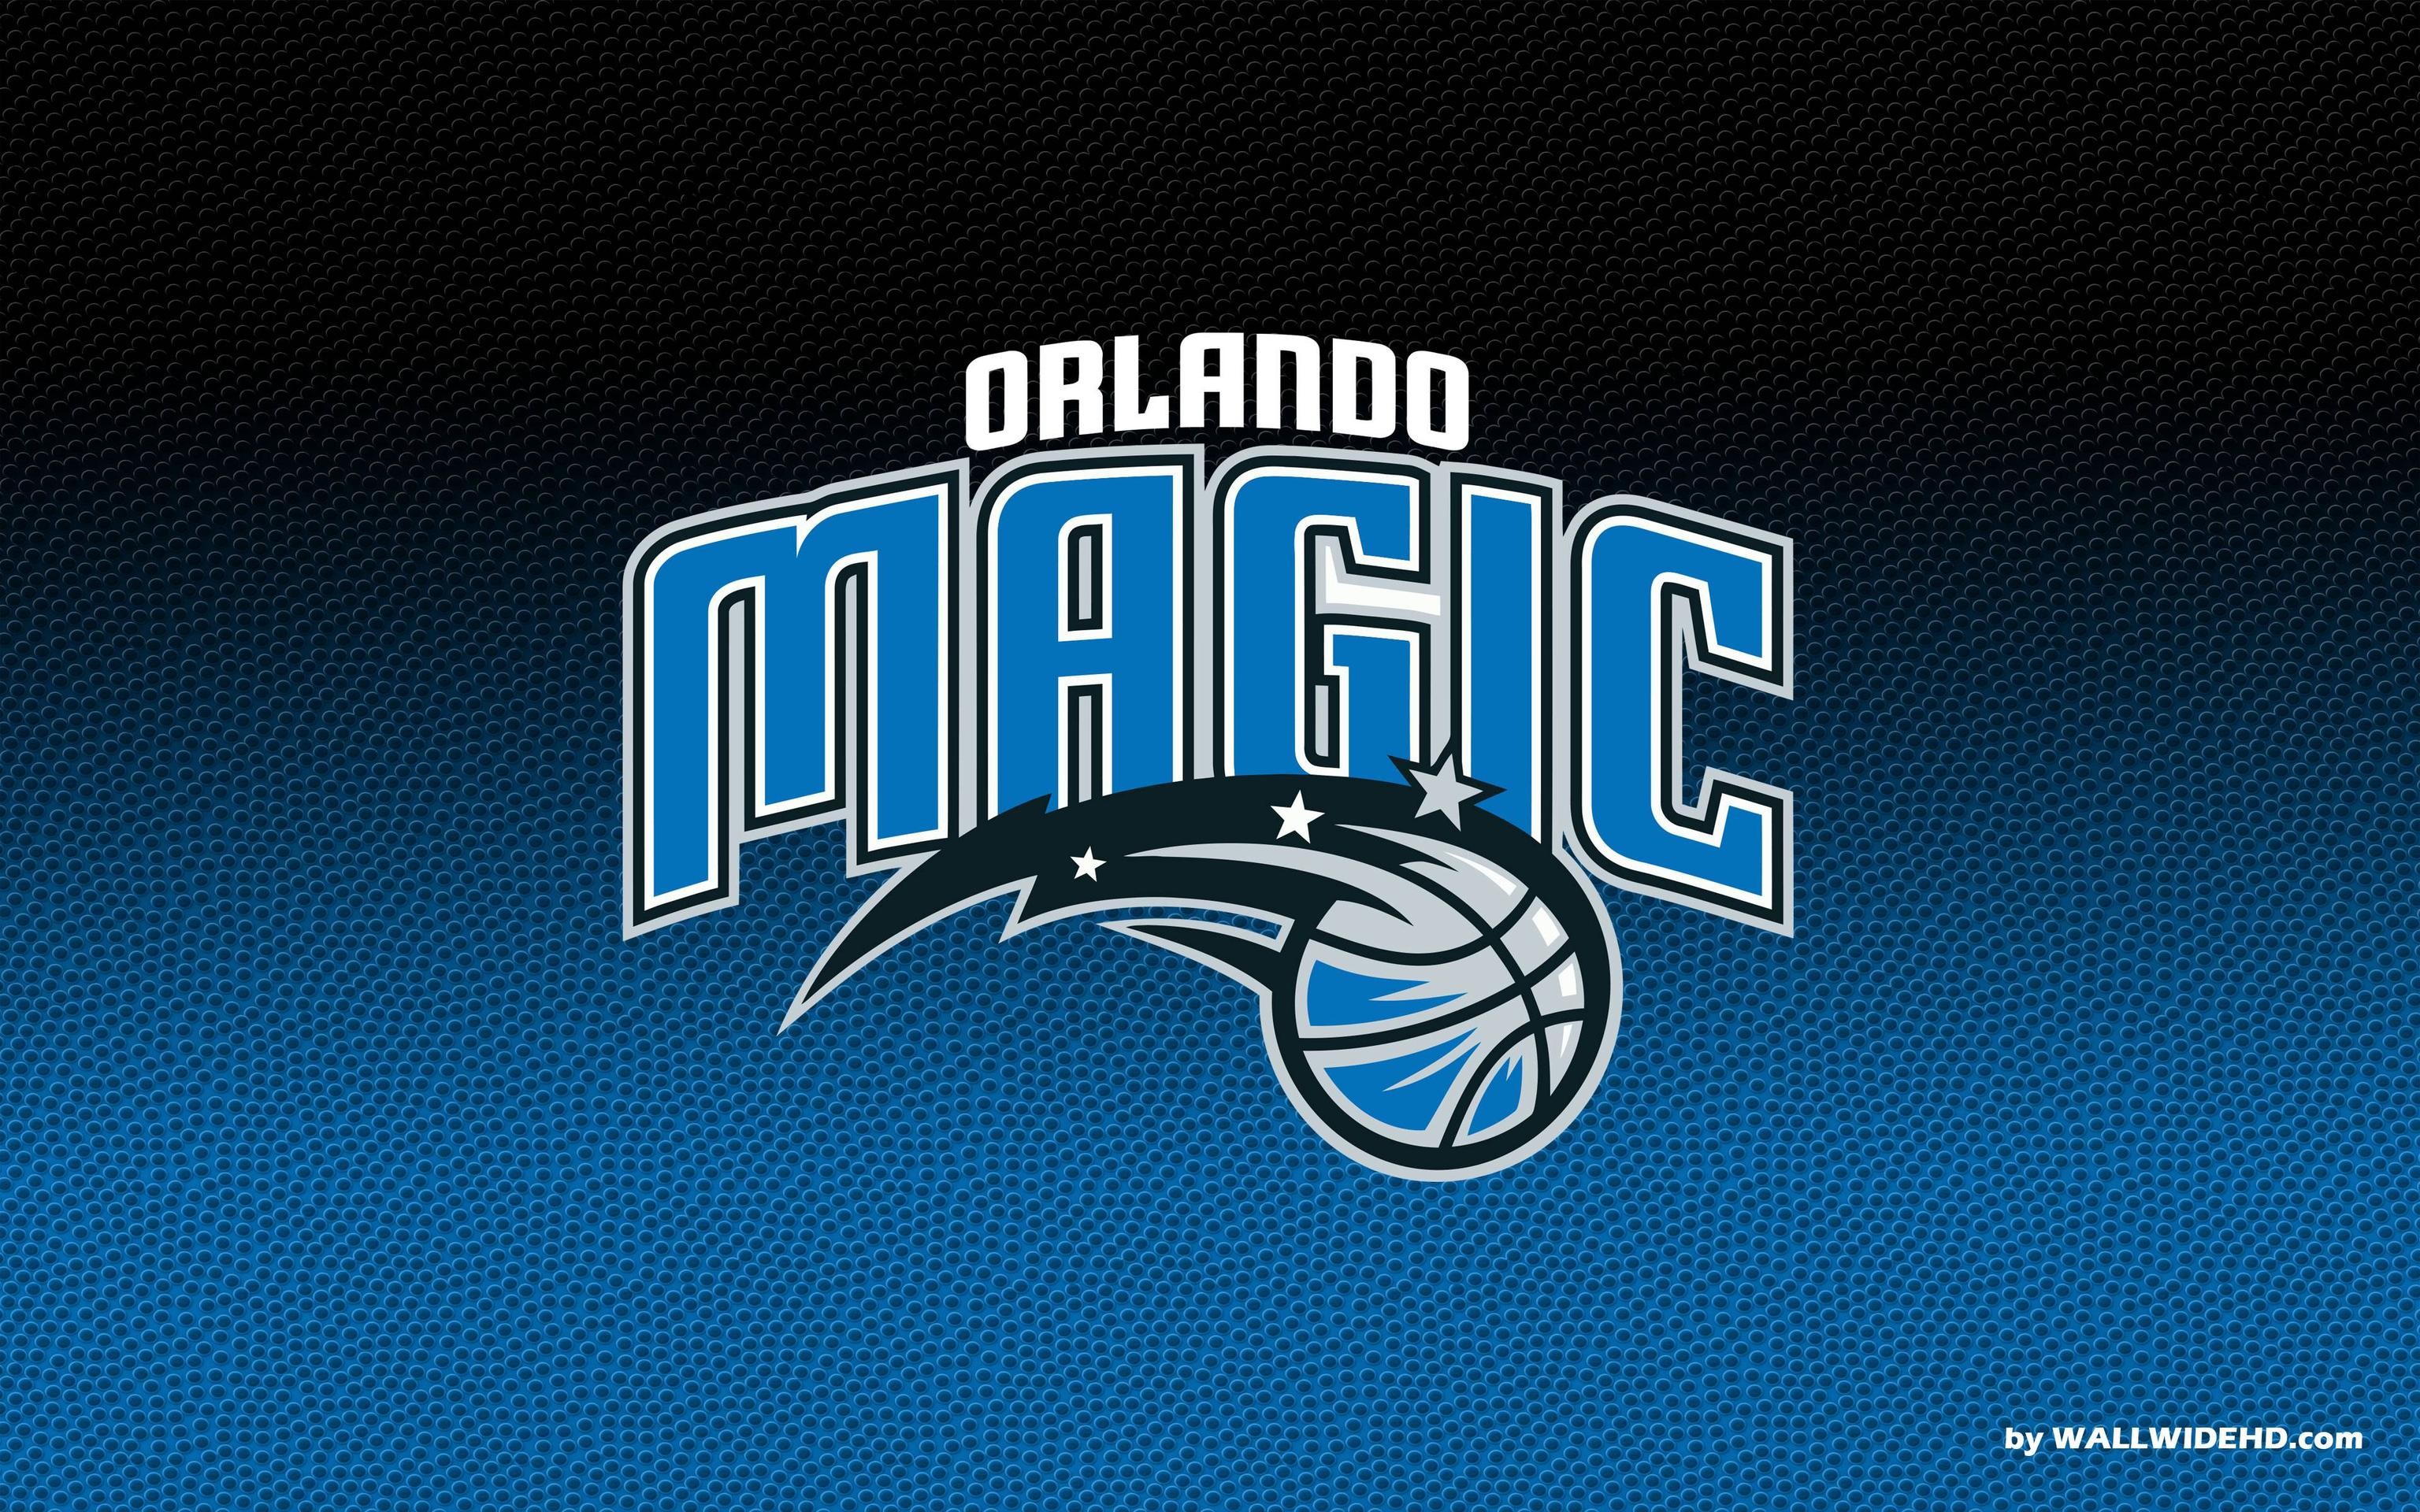 Orlando Magic 2014 Logo NBA Wallpaper Wide or HD Sports Wallpapers